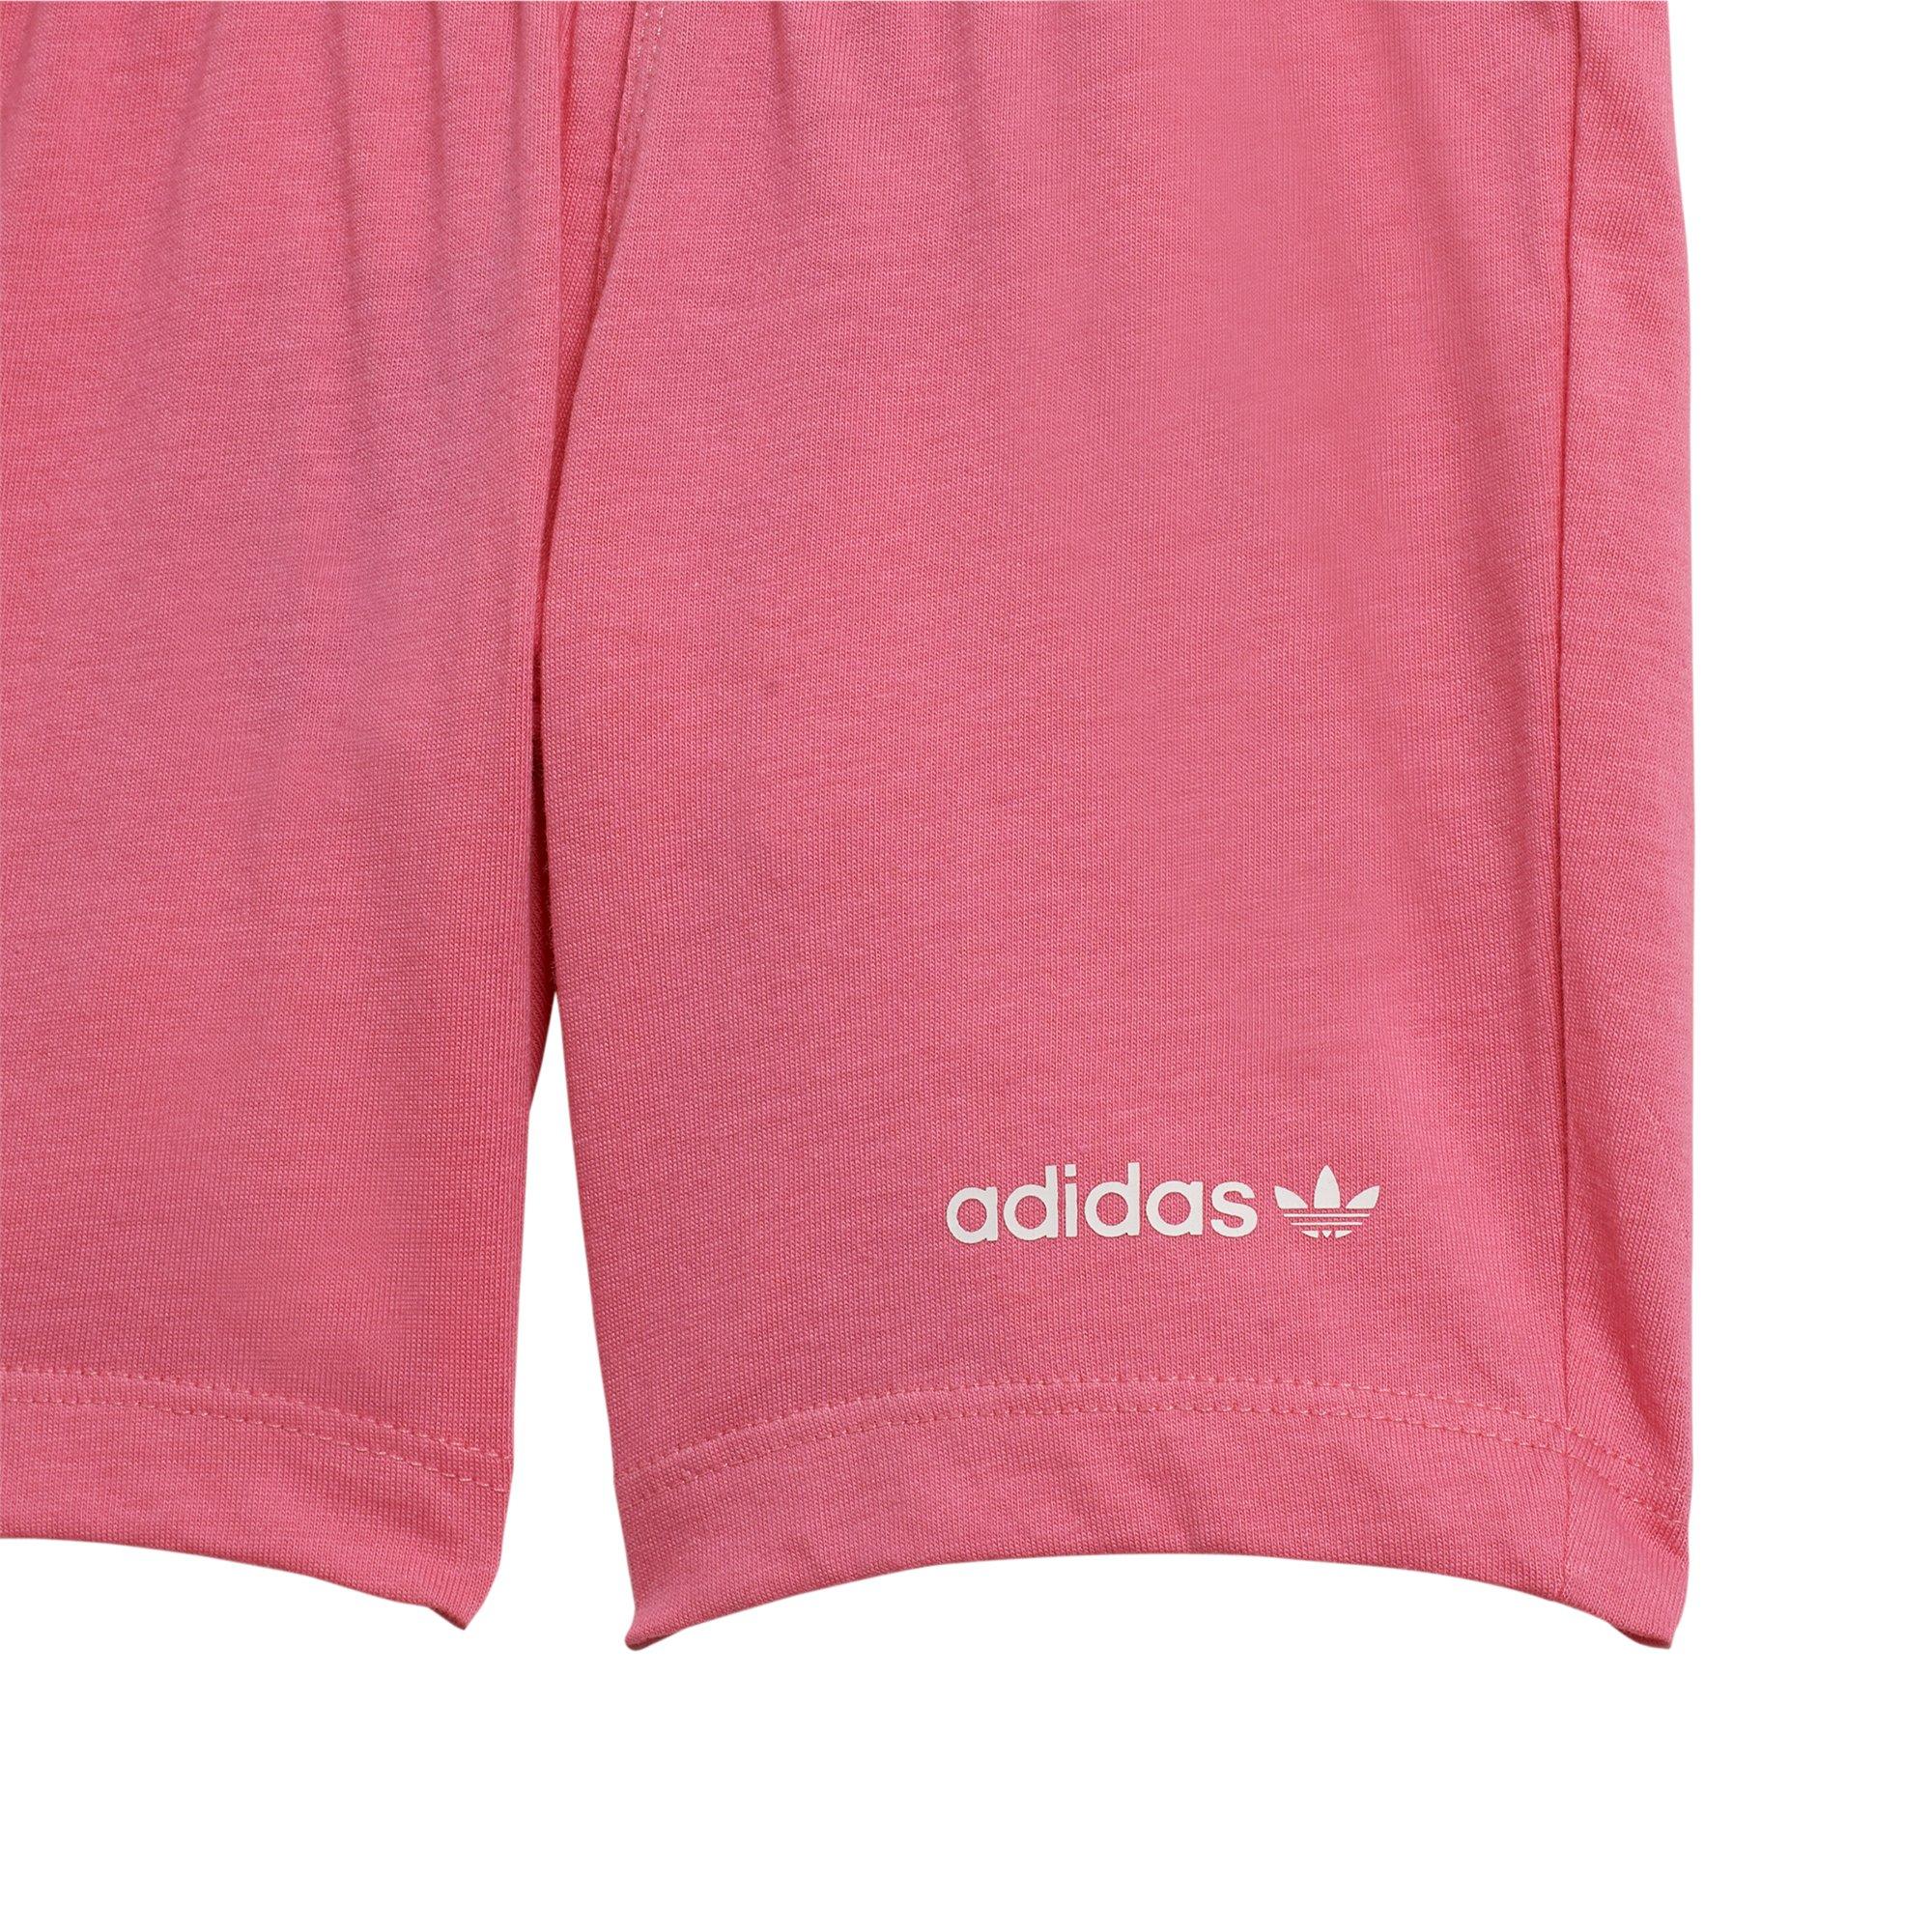 adidas Originals Set Gear Shorts | - Tee White/Pink City Hibbett Toddler Girls\' and Adicolor